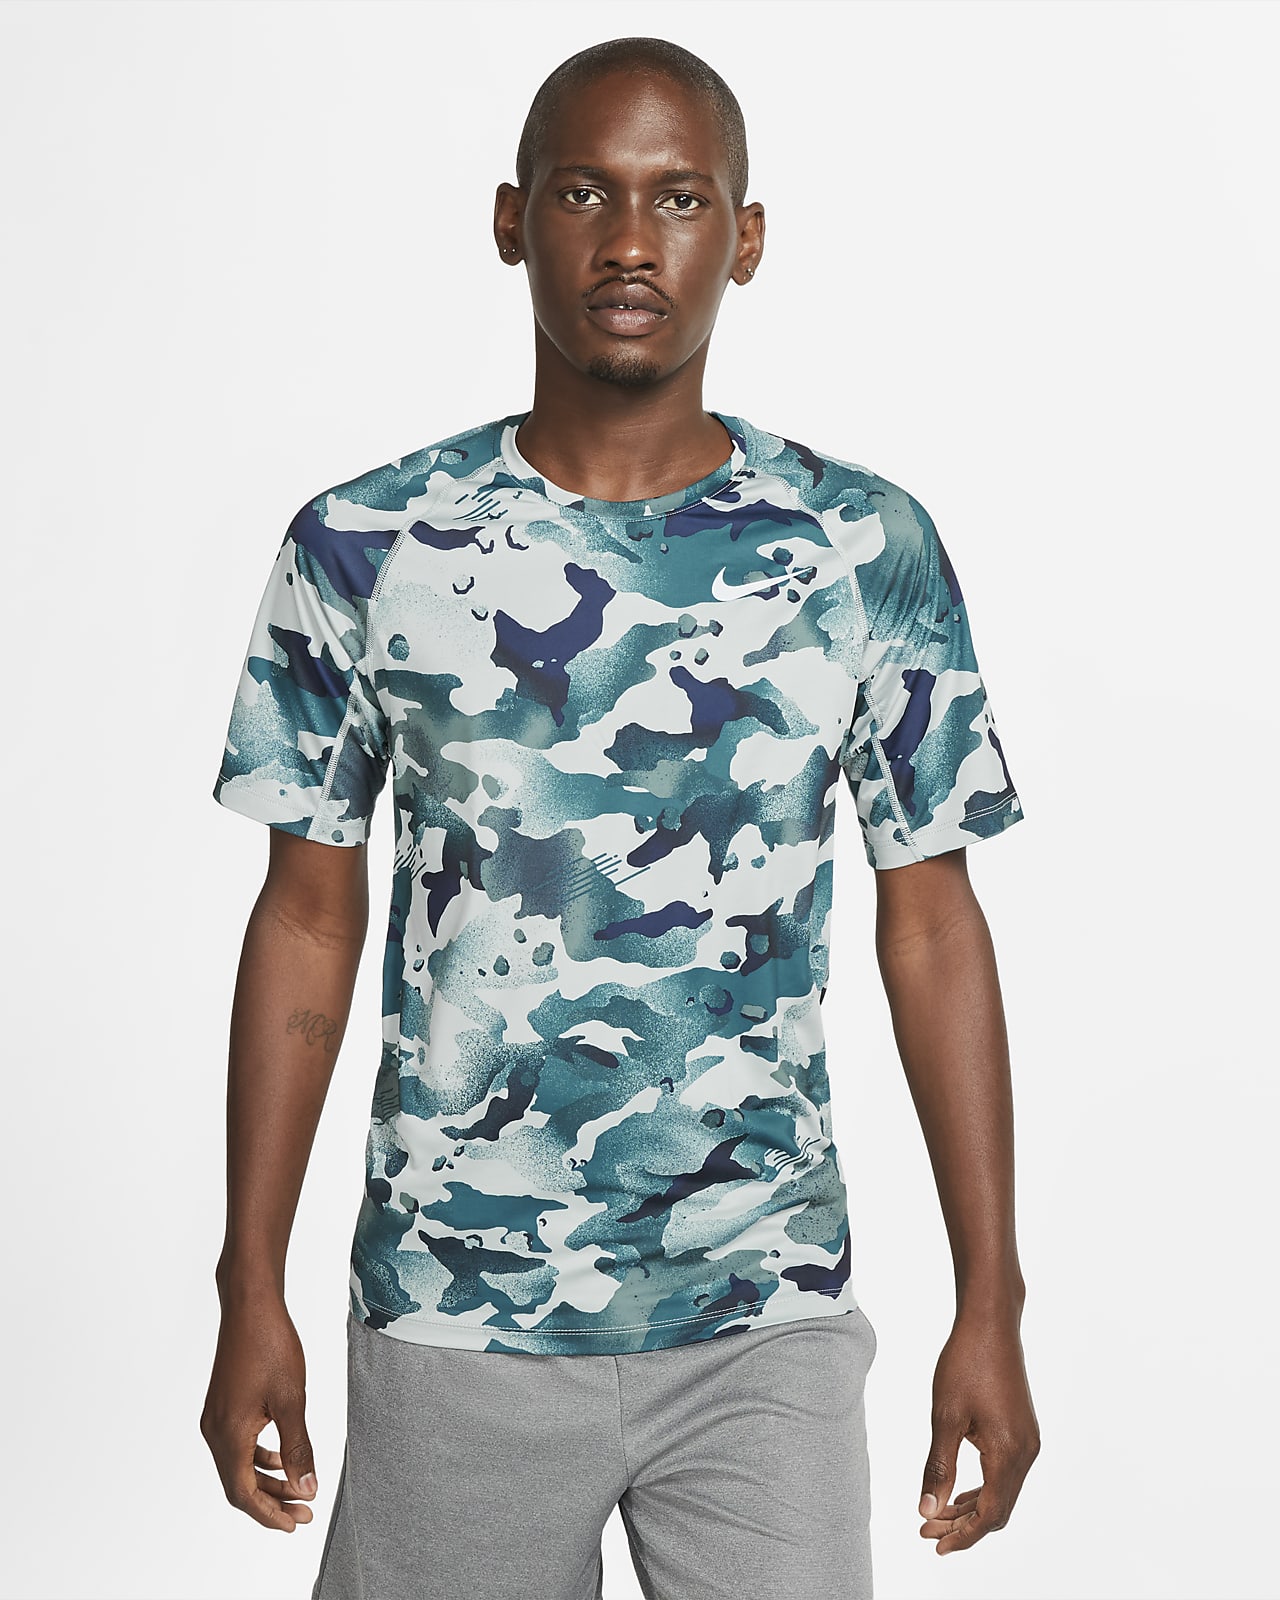 Nike Pro Men's Short-Sleeve Camo Top 